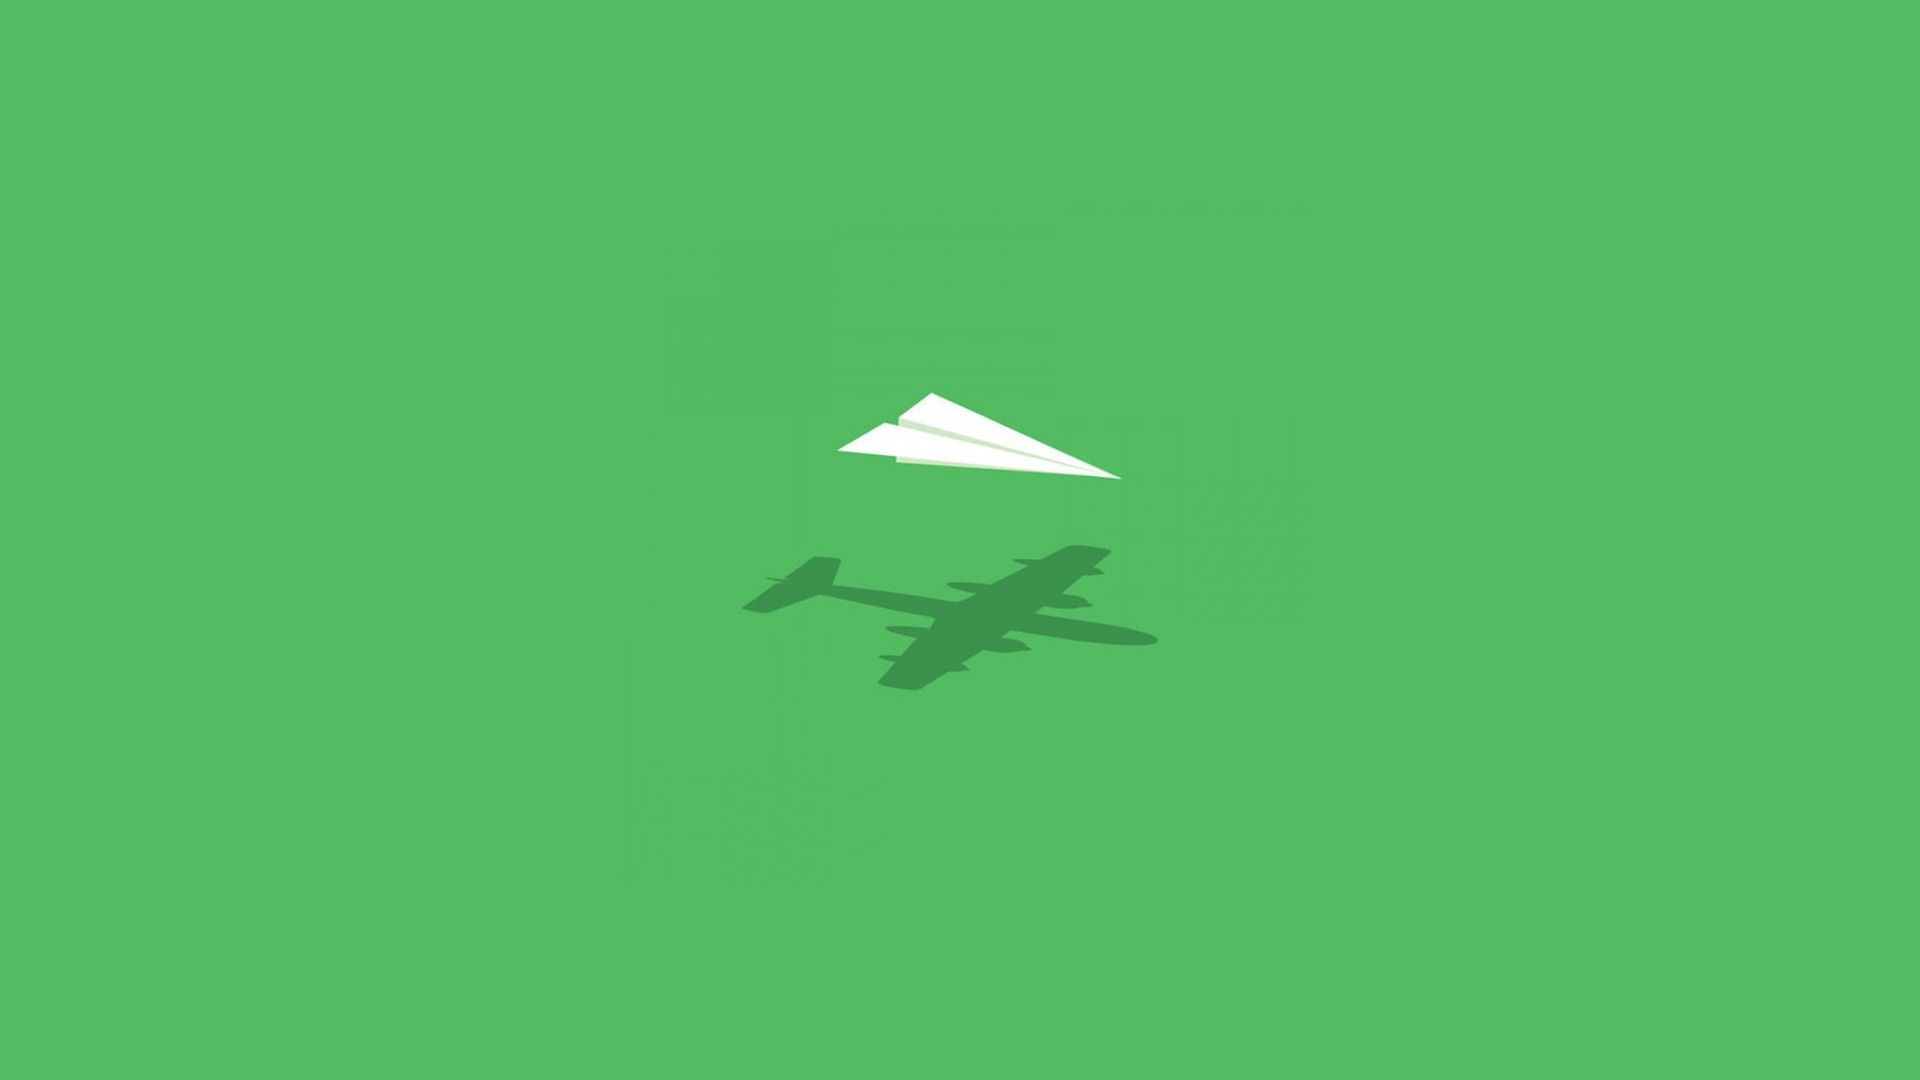 Aircraft minimalistic wall humor imagination paper plane wallpaperx1080